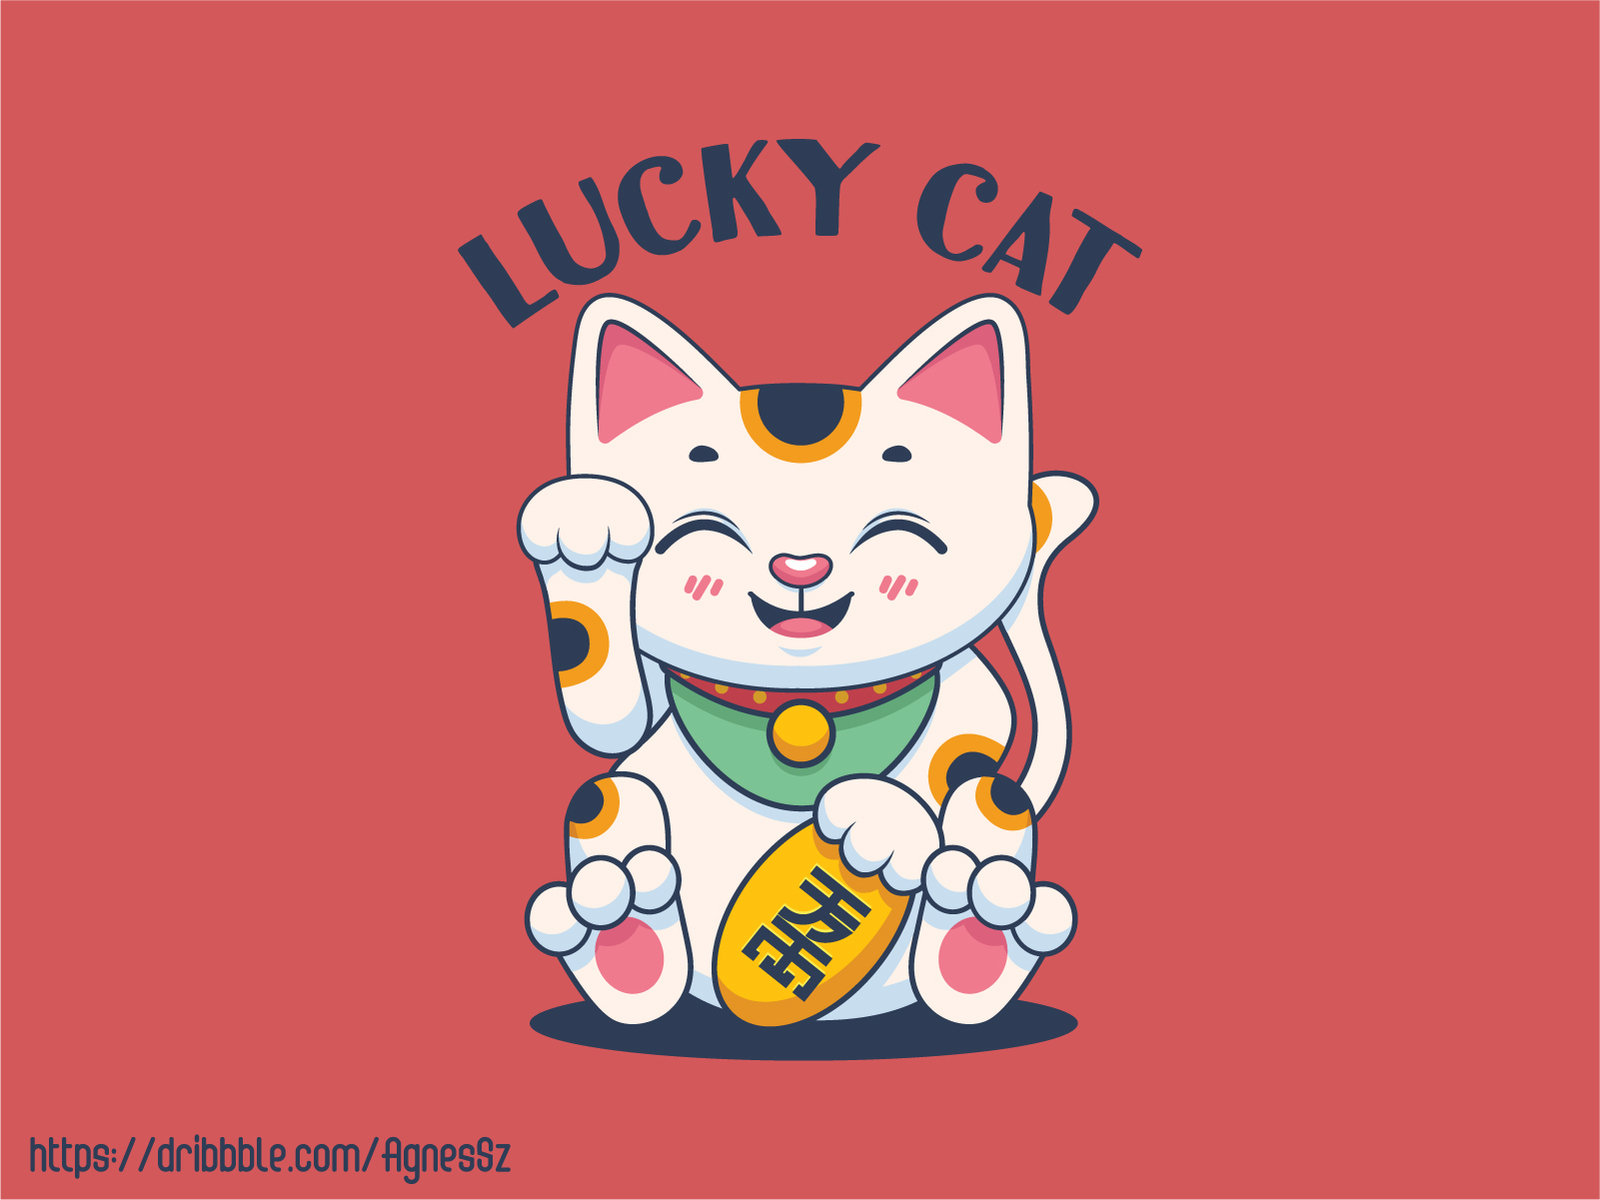 16472 Lucky Cat Images Stock Photos  Vectors  Shutterstock